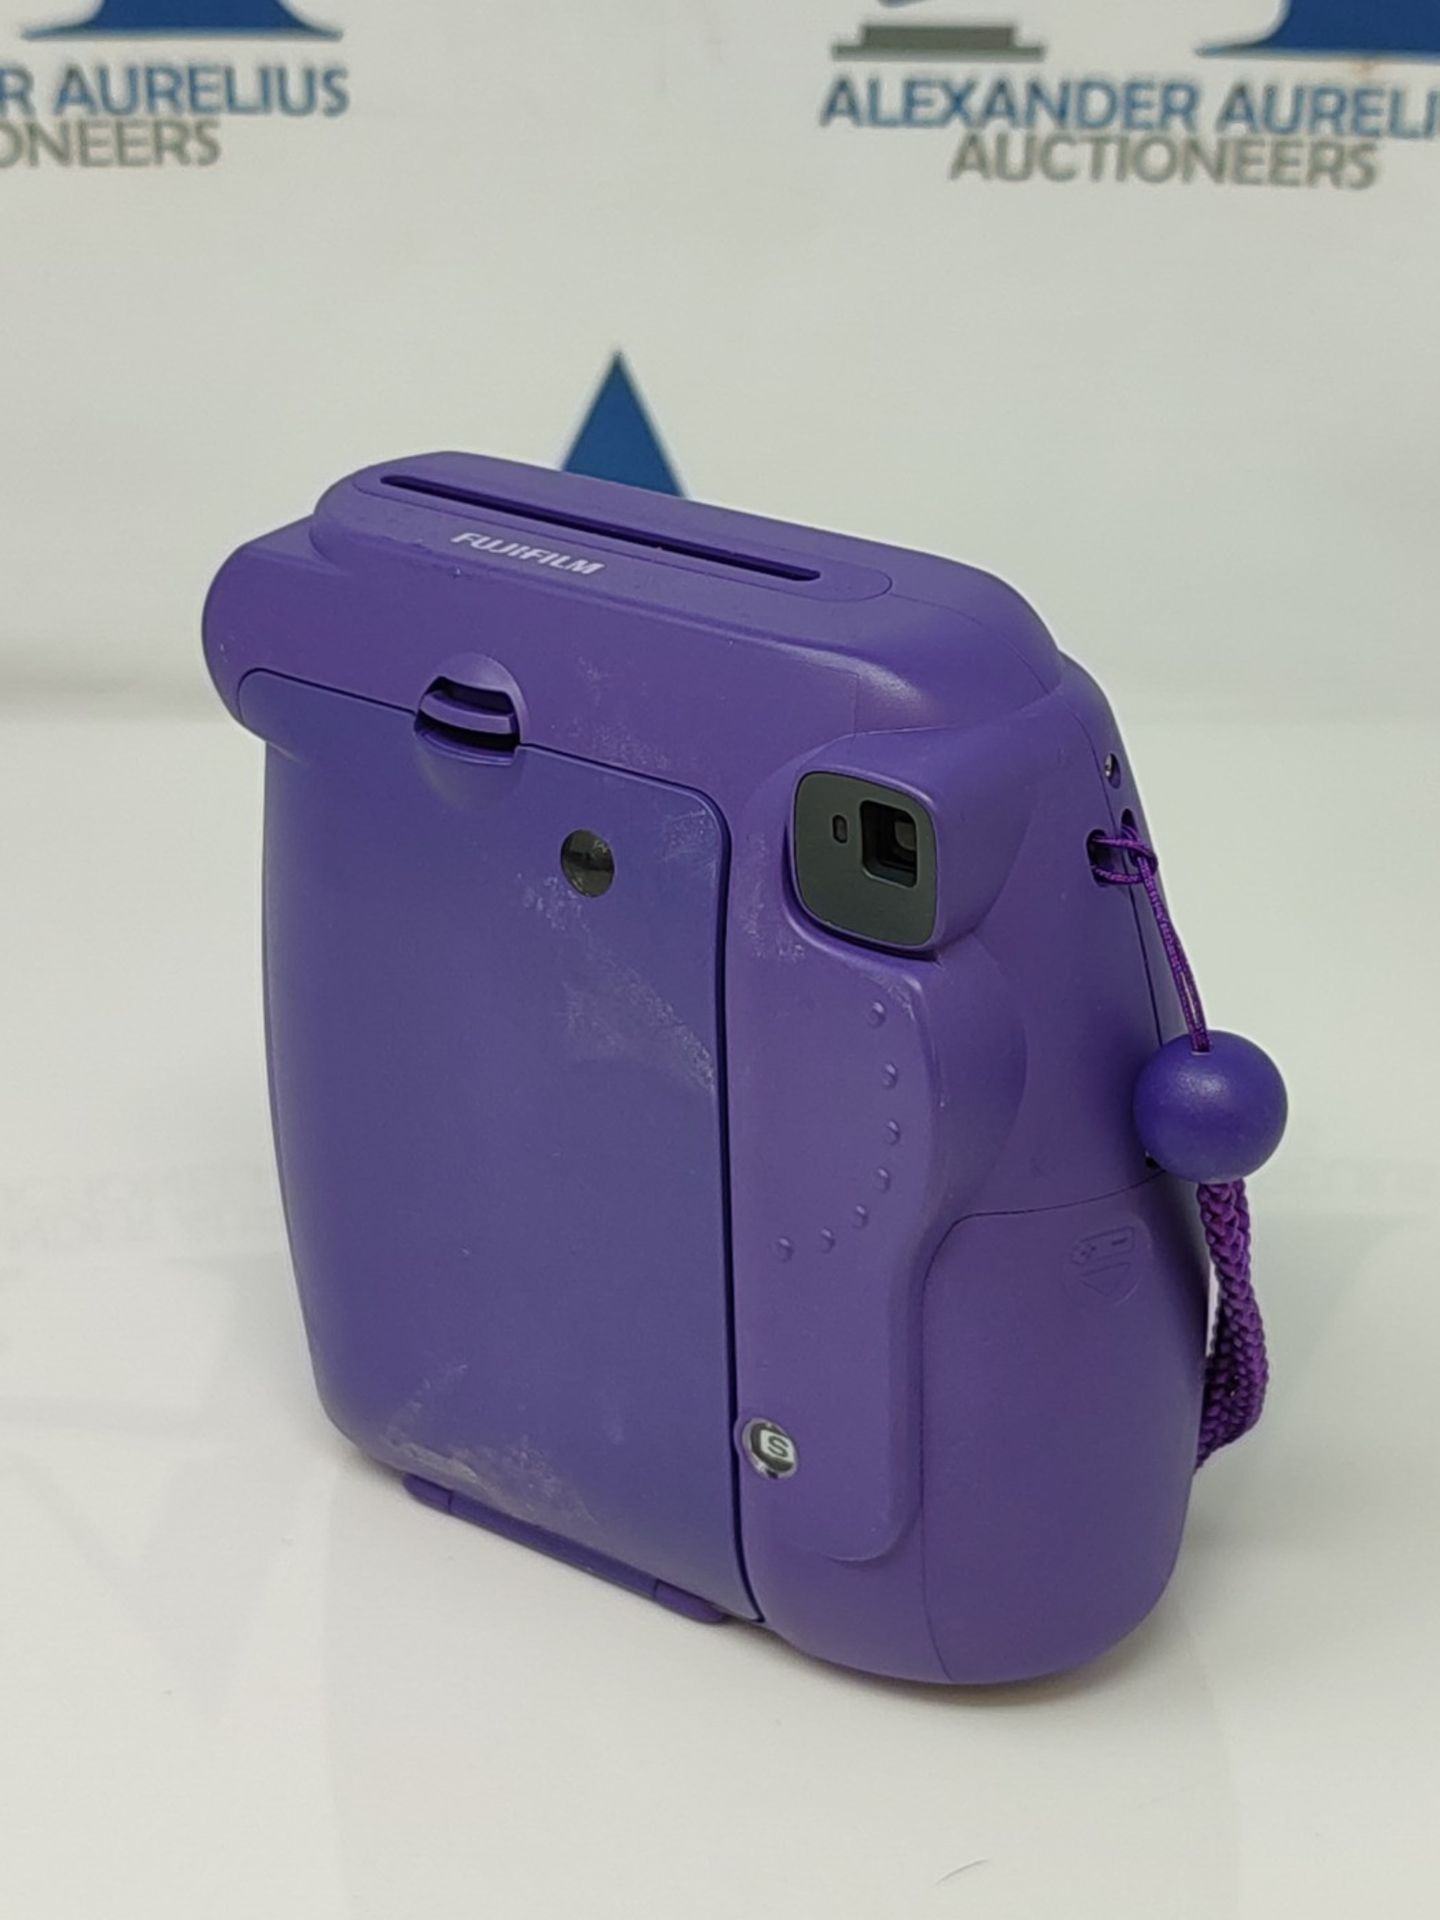 Instax Mini 8 Instant Film Print Camera Purple - Image 2 of 2